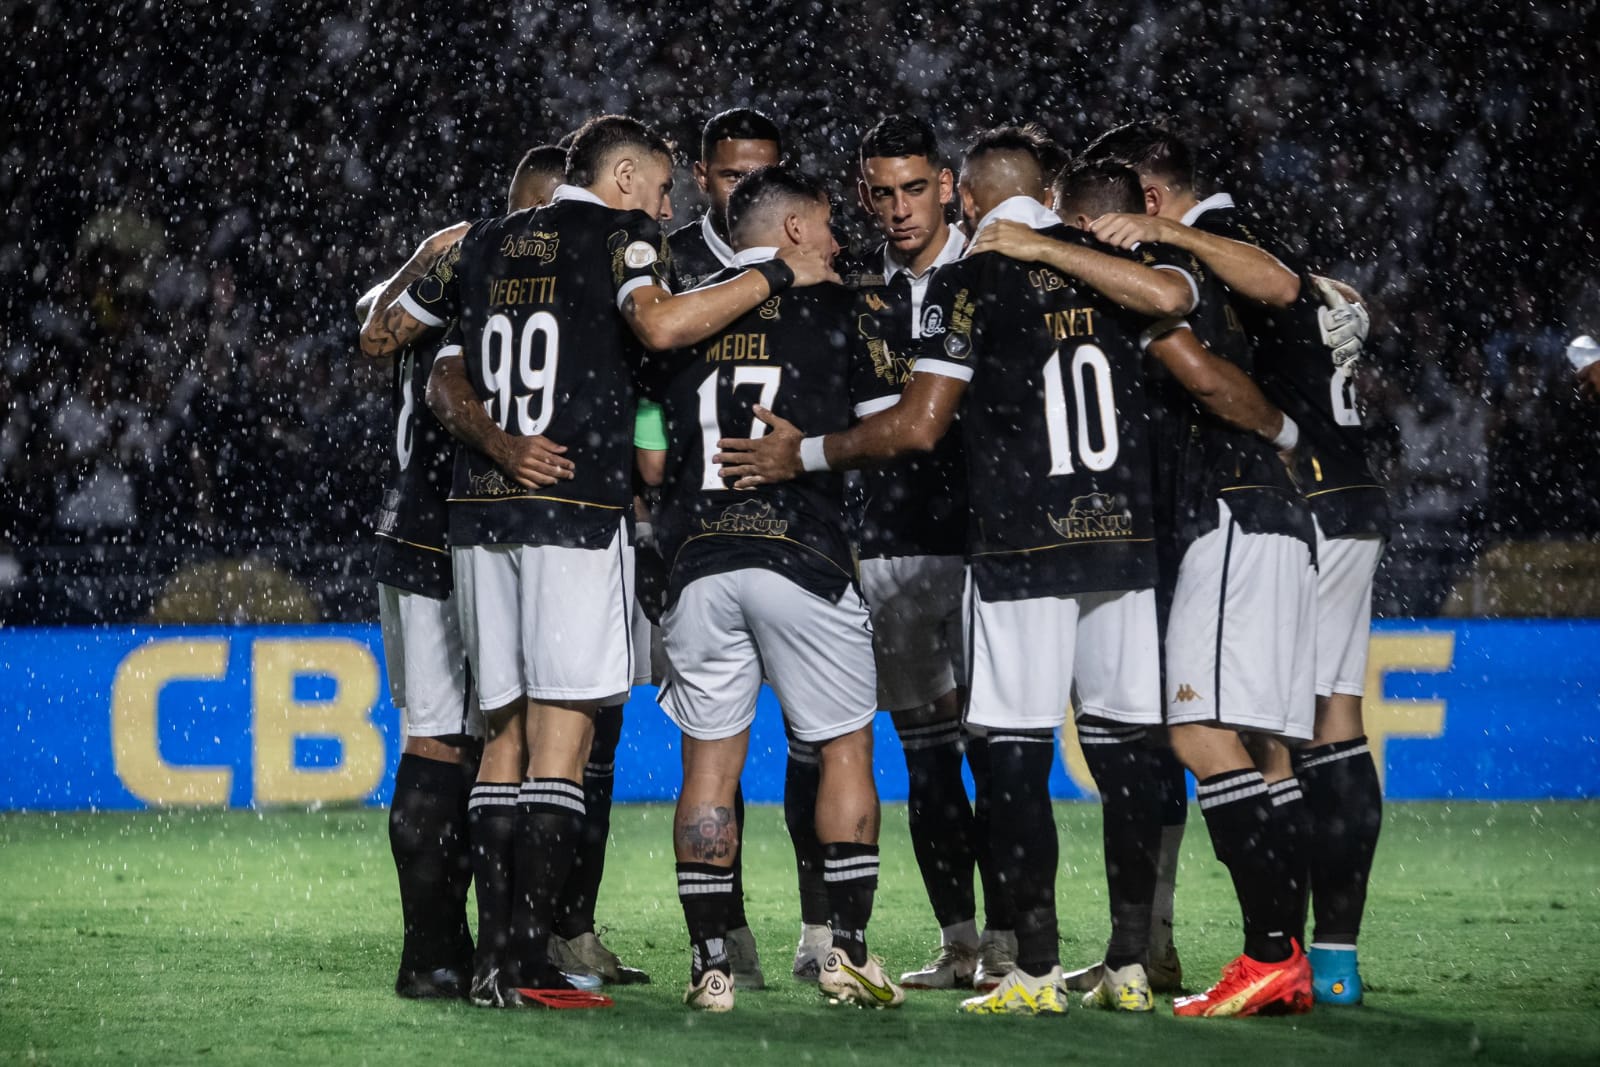 Vegetti convirtió en la derrota del Vasco ante Corinthians | Canal Showsport